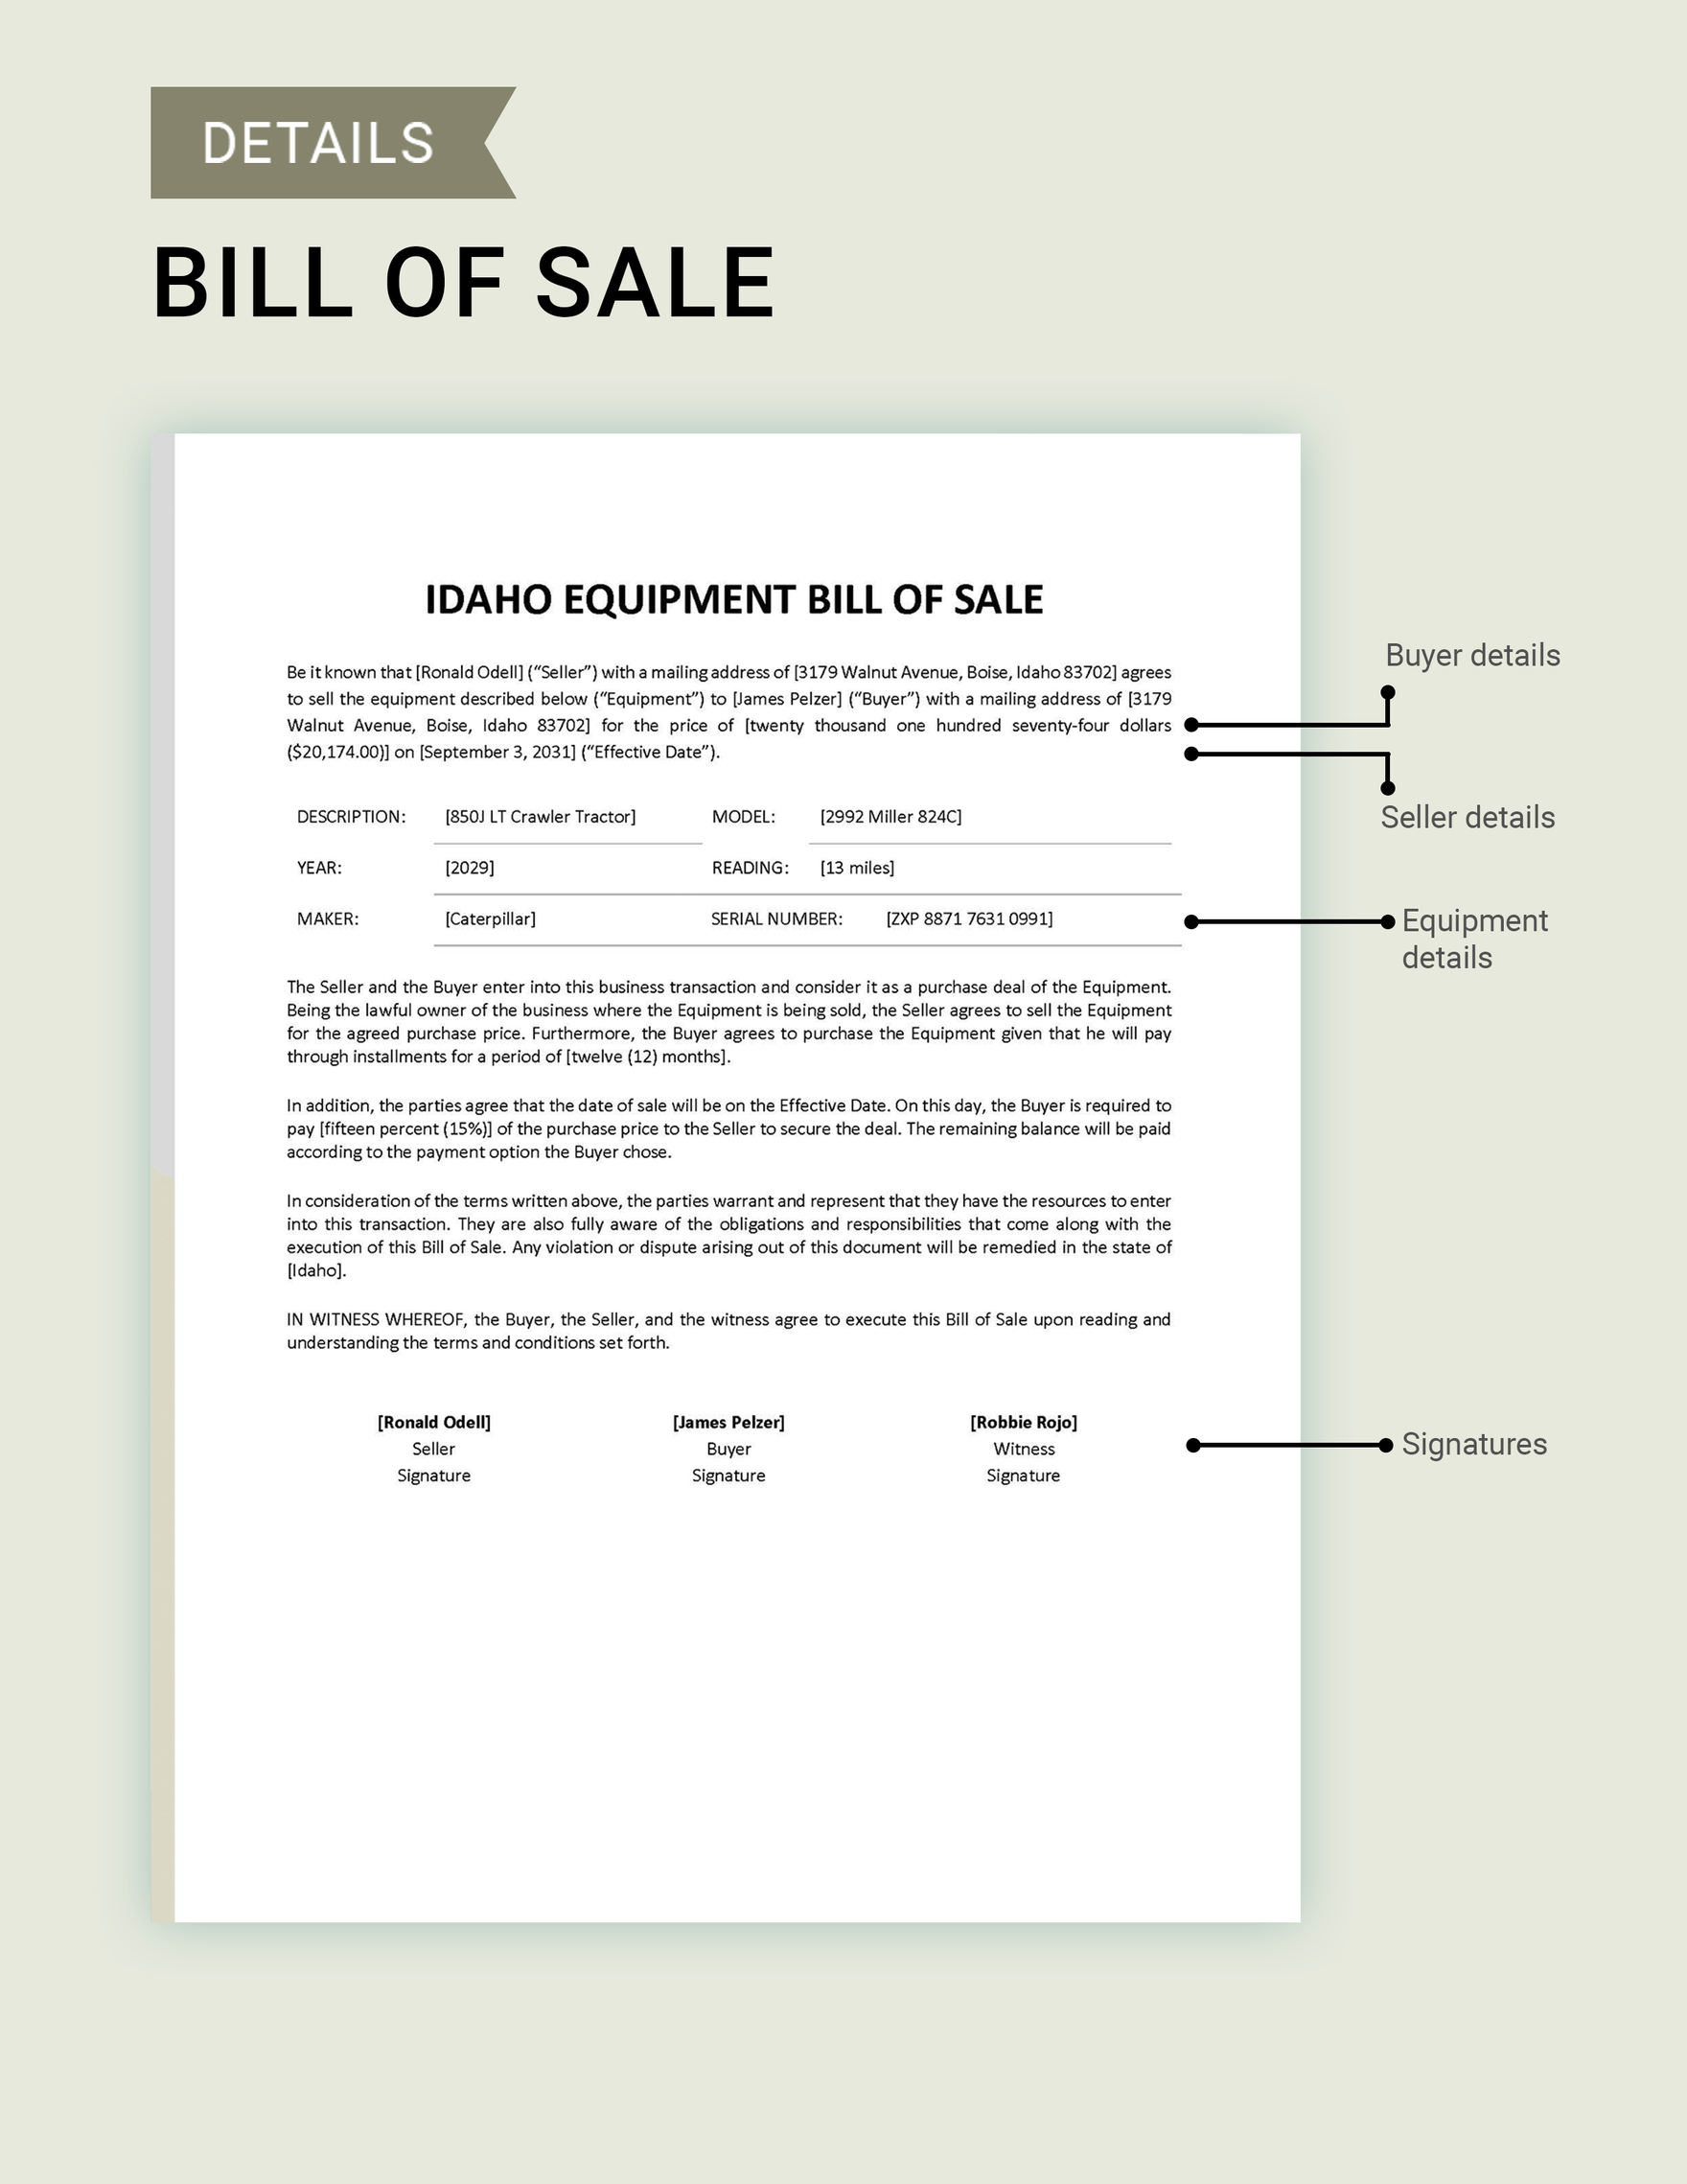 Idaho Equipment Bill of Sale Template